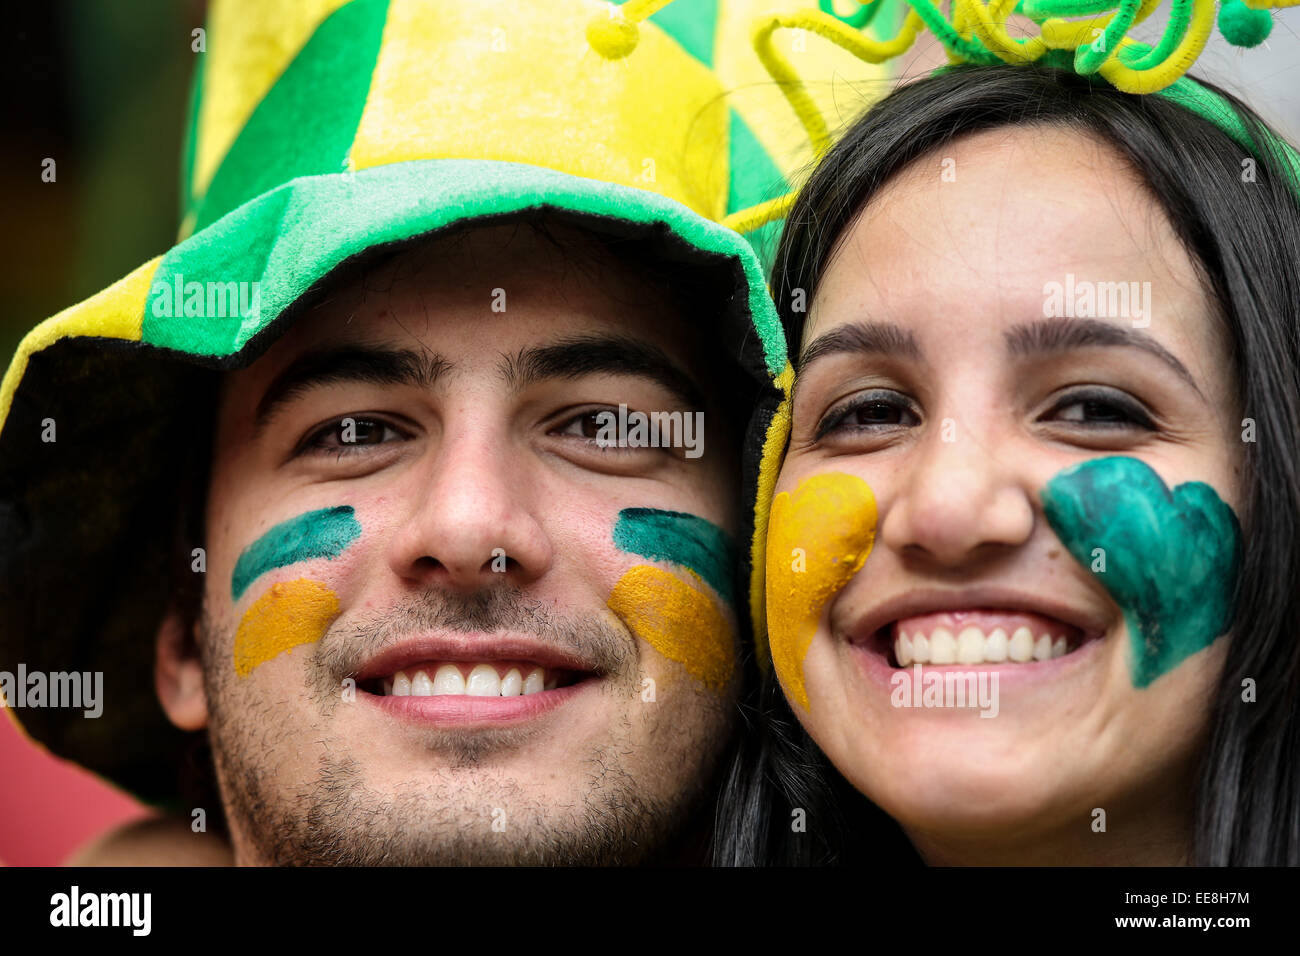 Atmosphere at National Stadium of Brazil Mane Garrincha for the Third Place match, Brazil v Netherlands  Where: Brasília, Brazil When: 12 Jul 2014 Stock Photo